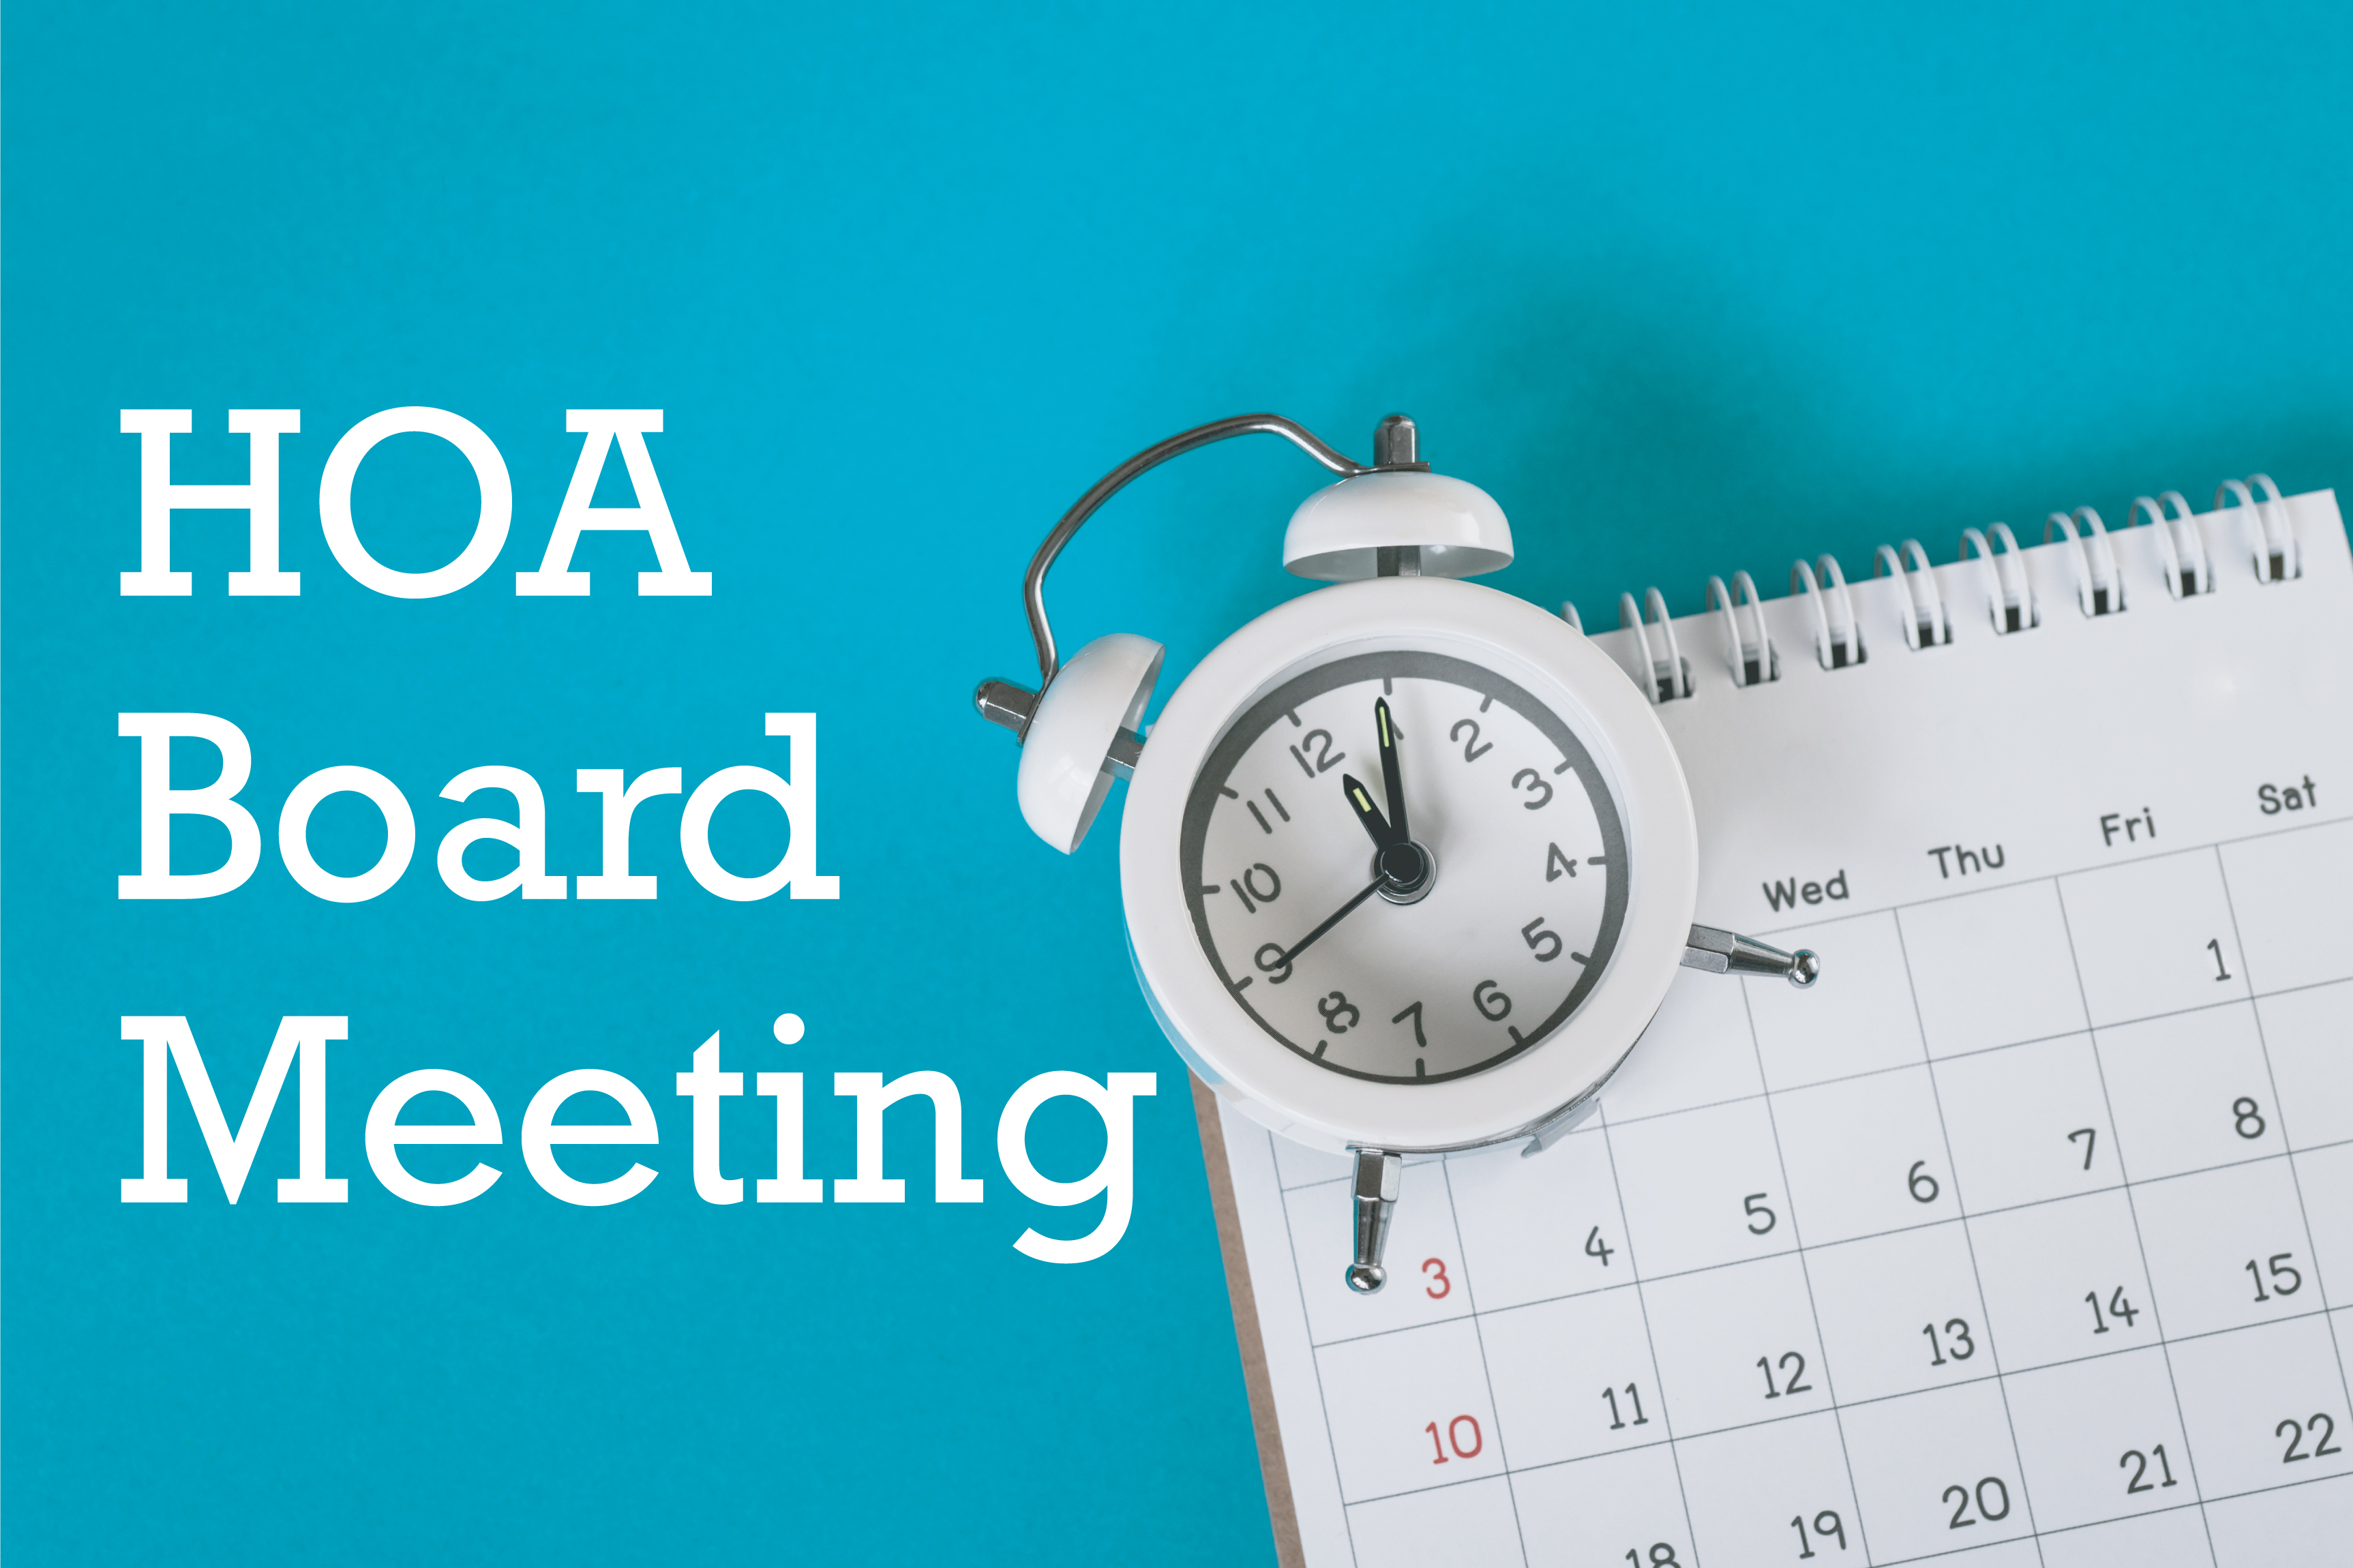 HOA Board Meeting on August 24